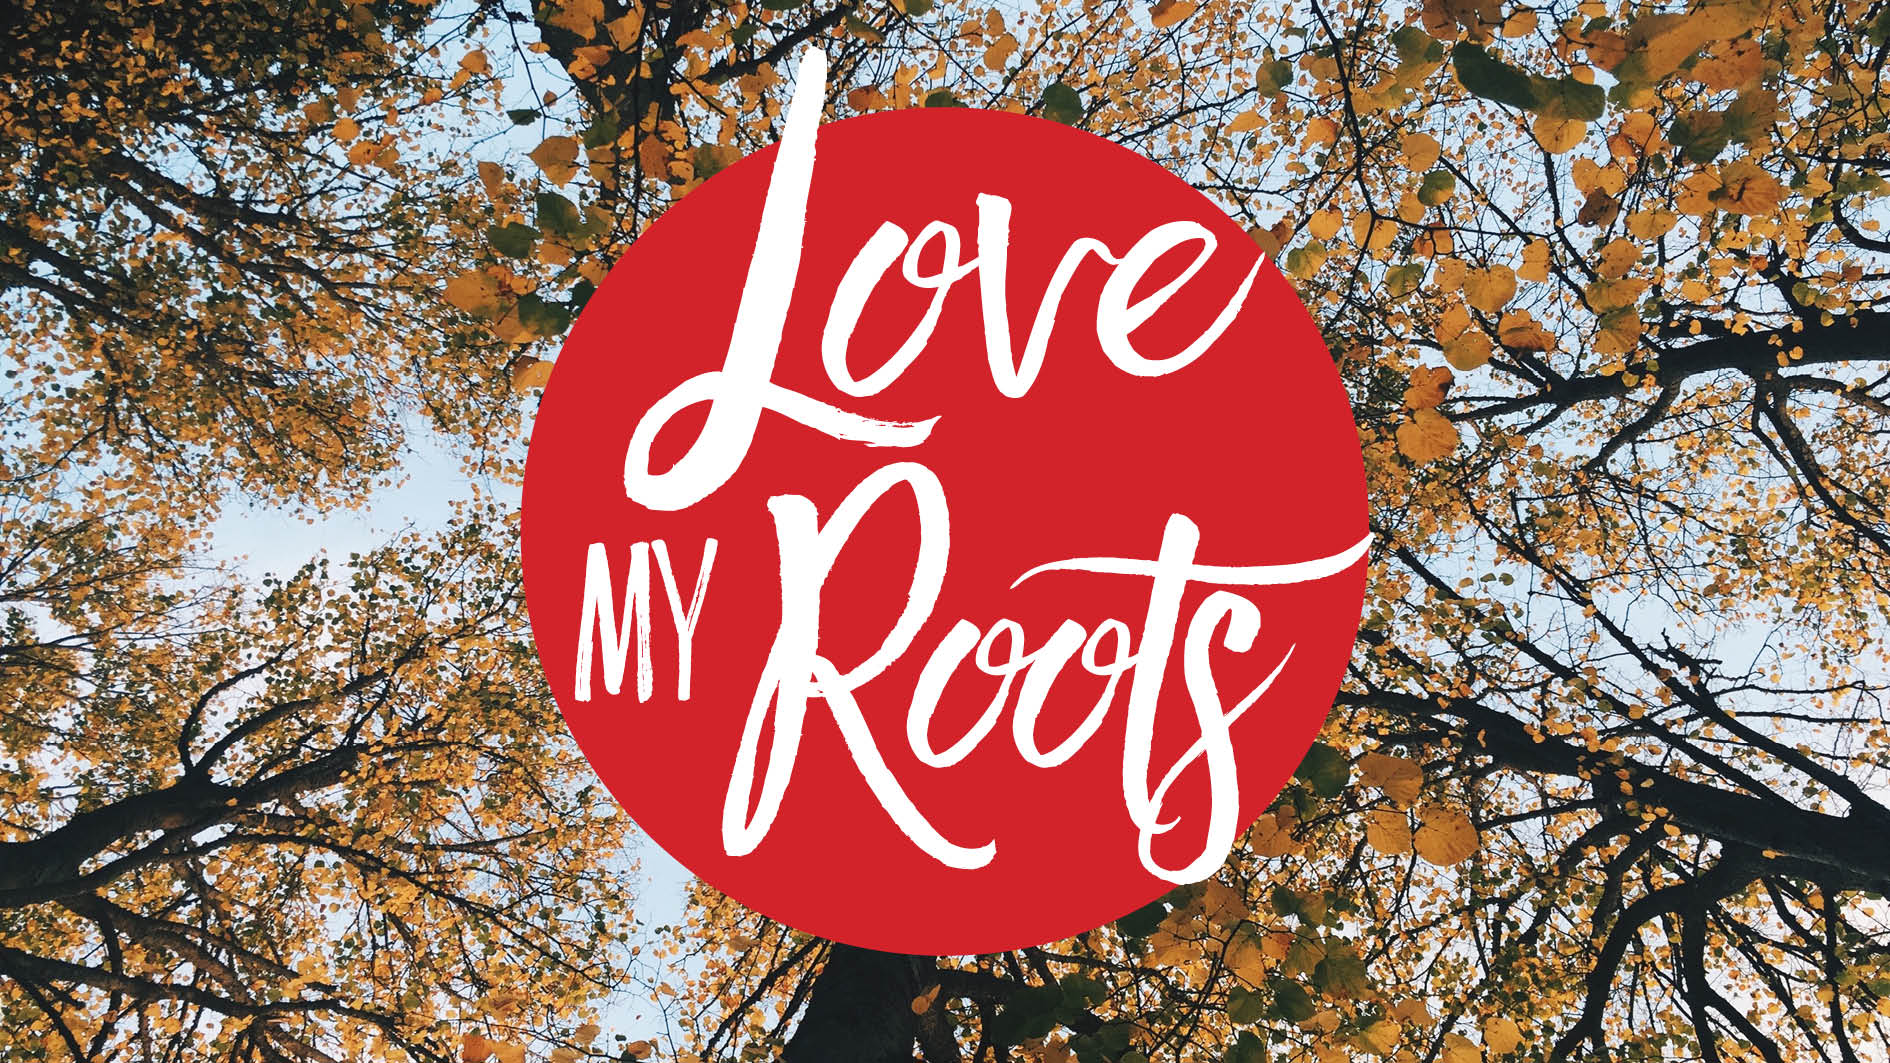 5-2-17 Love My Roots - Part 1 - Craig Jourdain